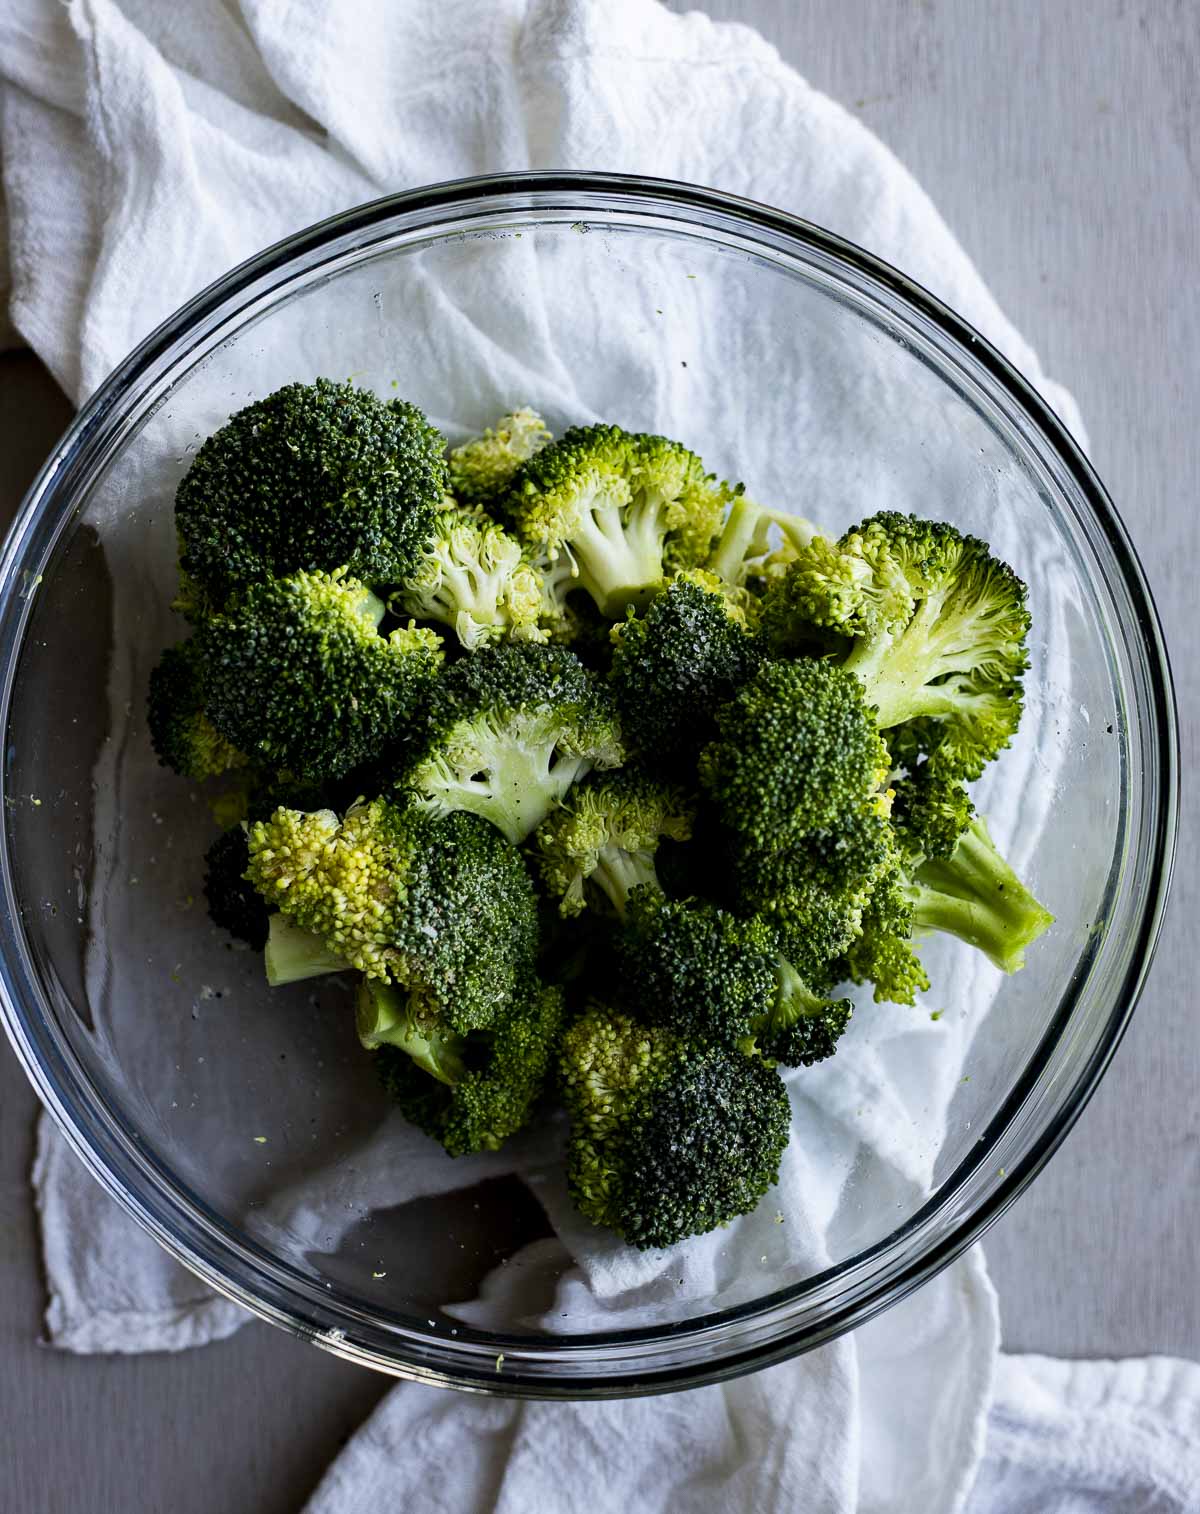 Raw broccoli florets in a glass bowl.